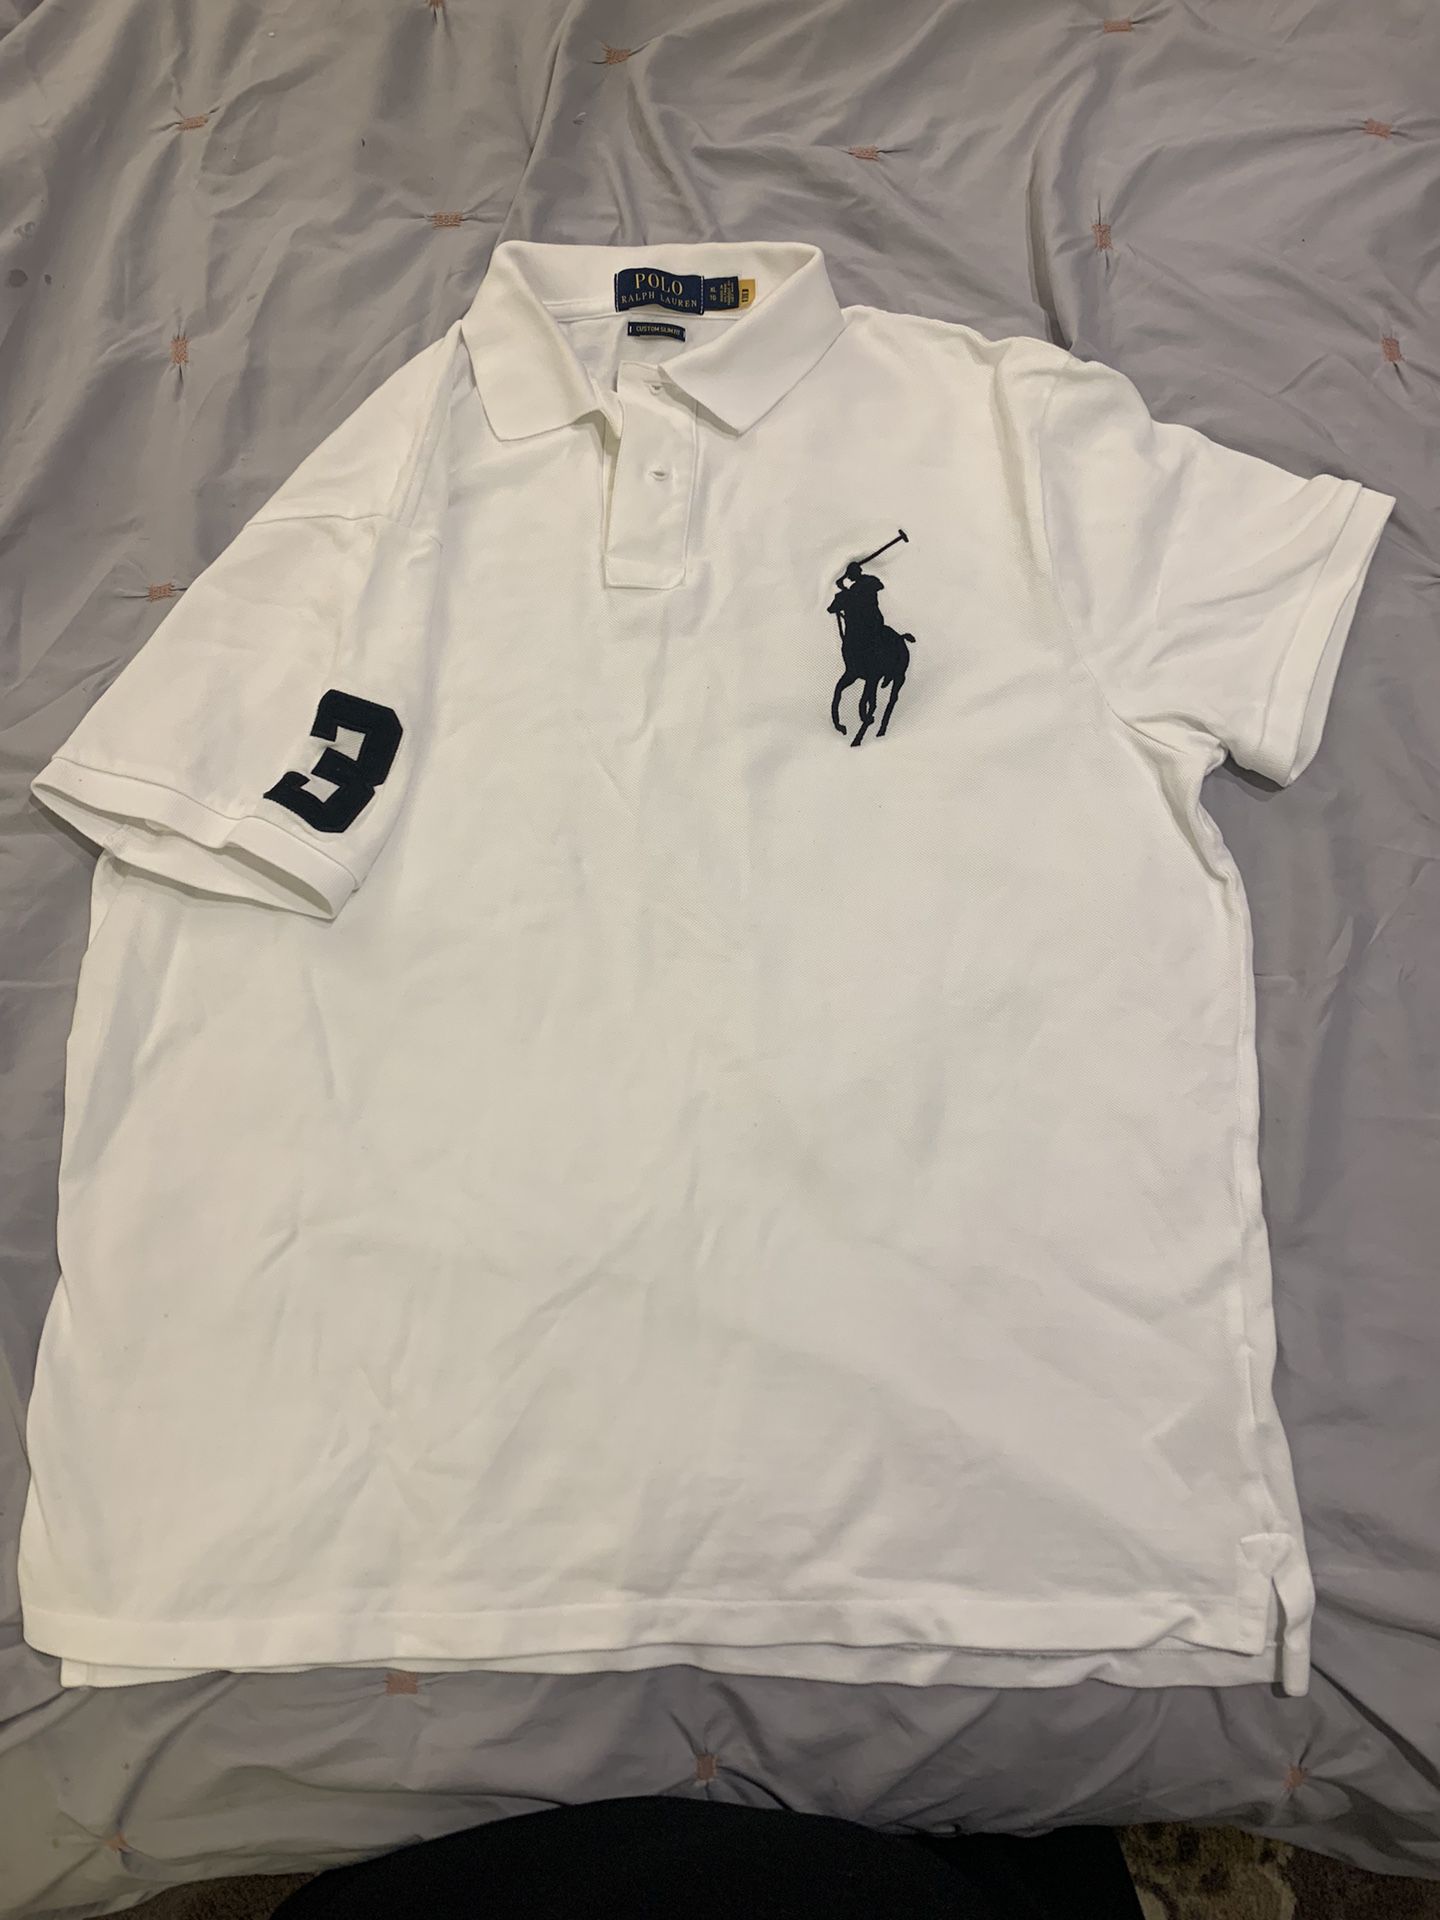 Ralph Lauren Big Pony Cotton Men’s Polo Shirt